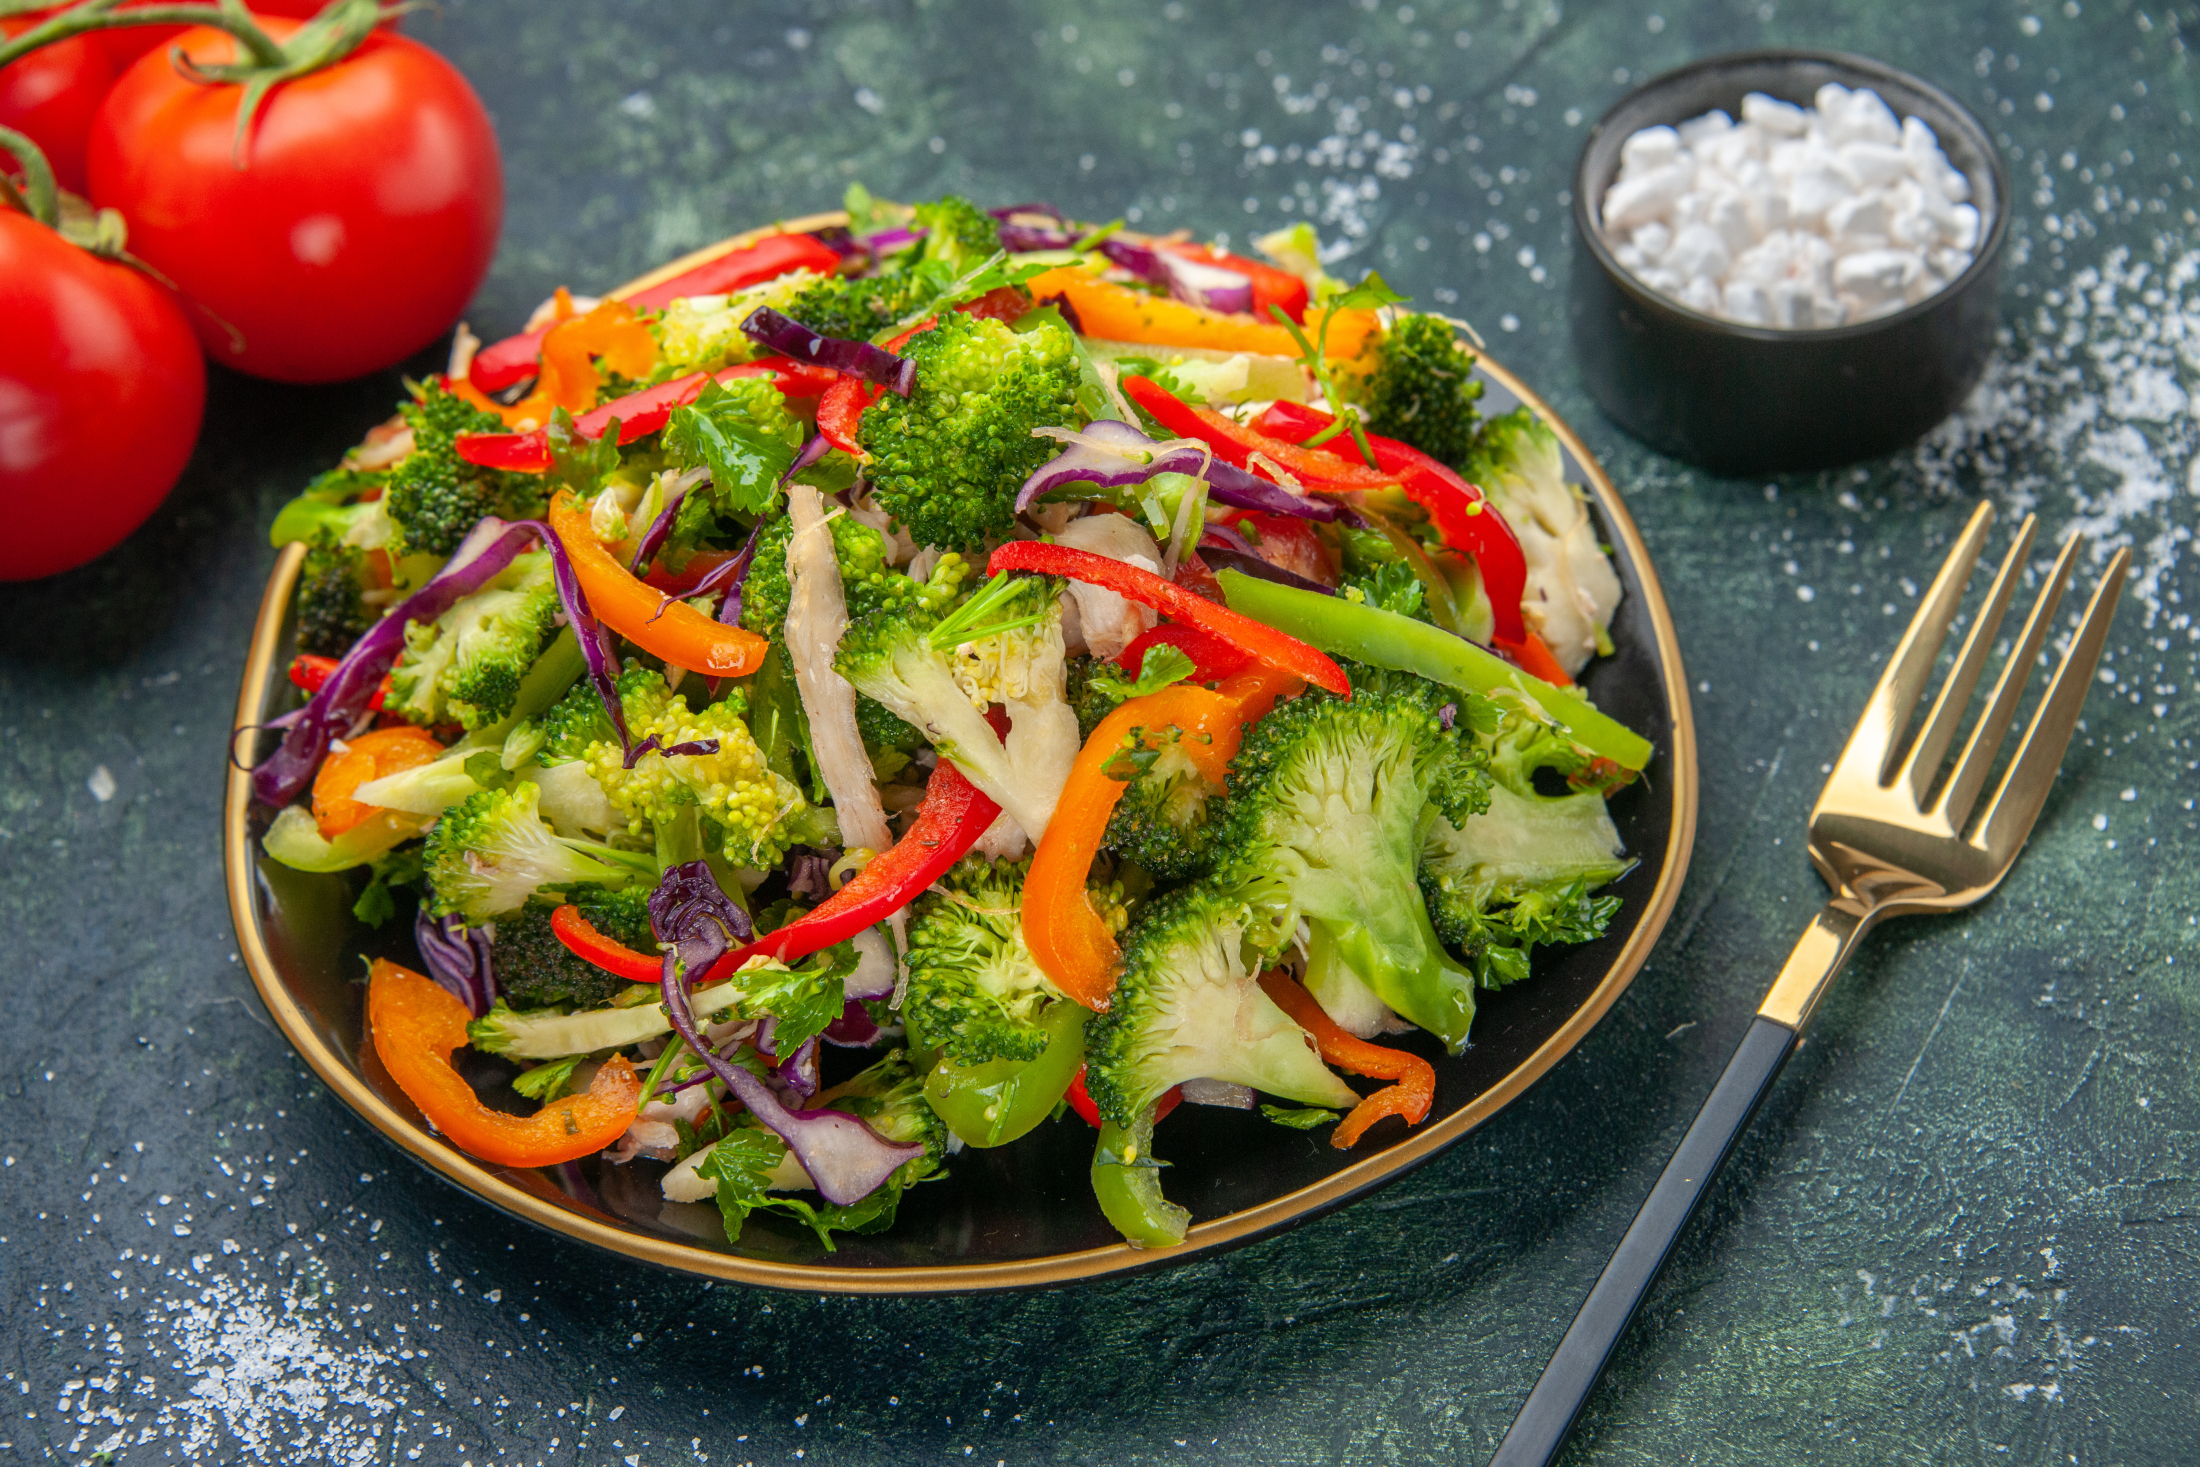 side-view-vegan-salad-plate-with-various-vegetables-fork-tomatoes-with-stem-dark-background.jpg